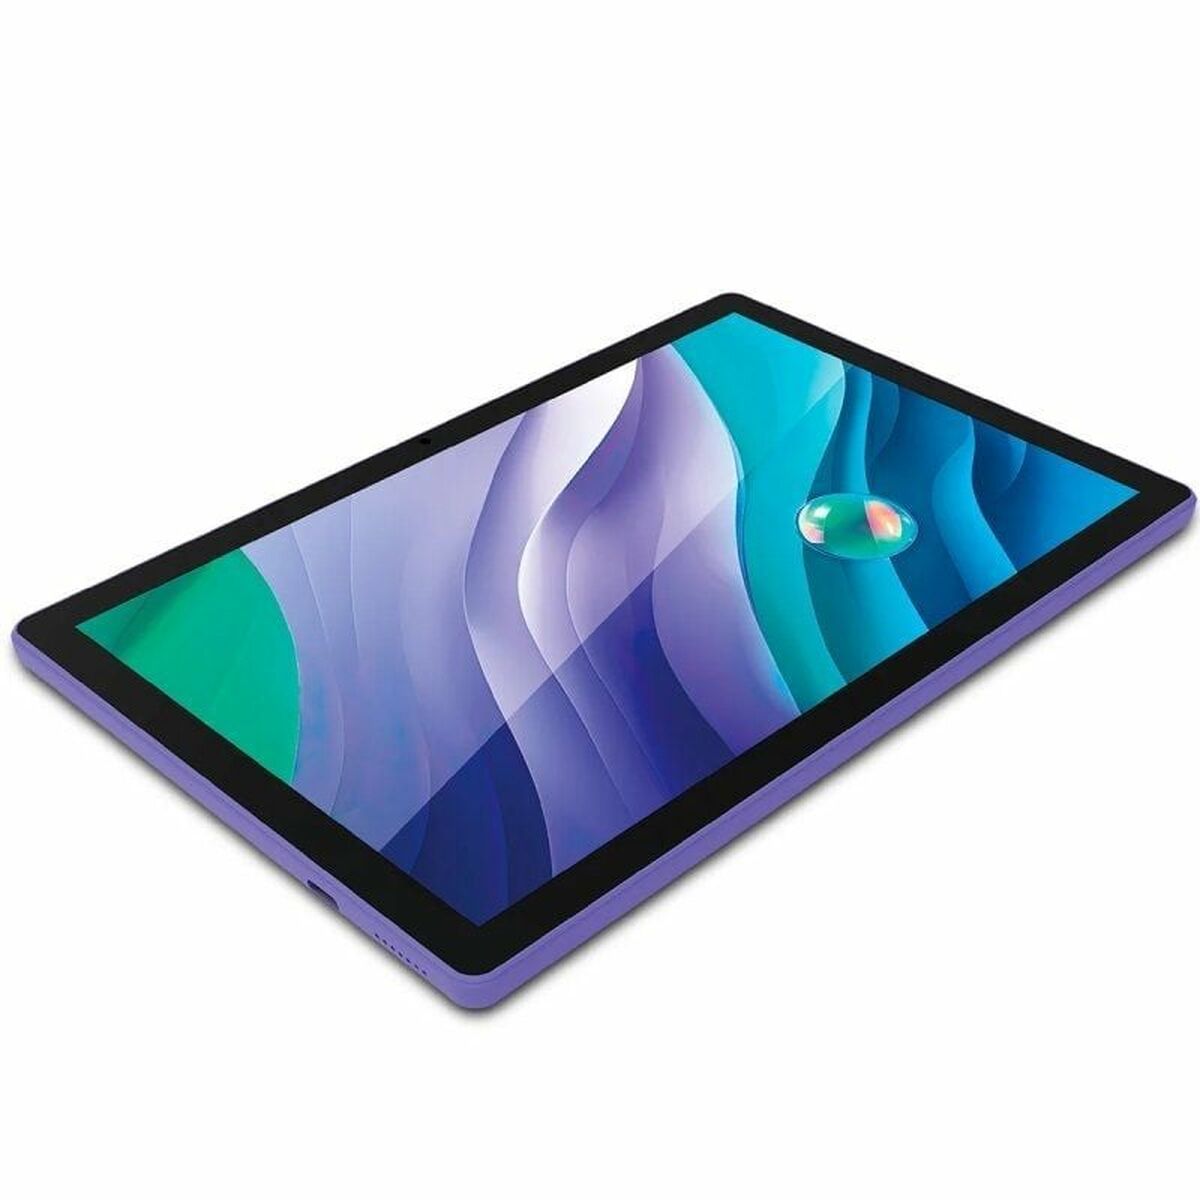 Tablet SPC Gravity 5 SE Octa Core 4 GB RAM 64 GB Purpur 10,1"